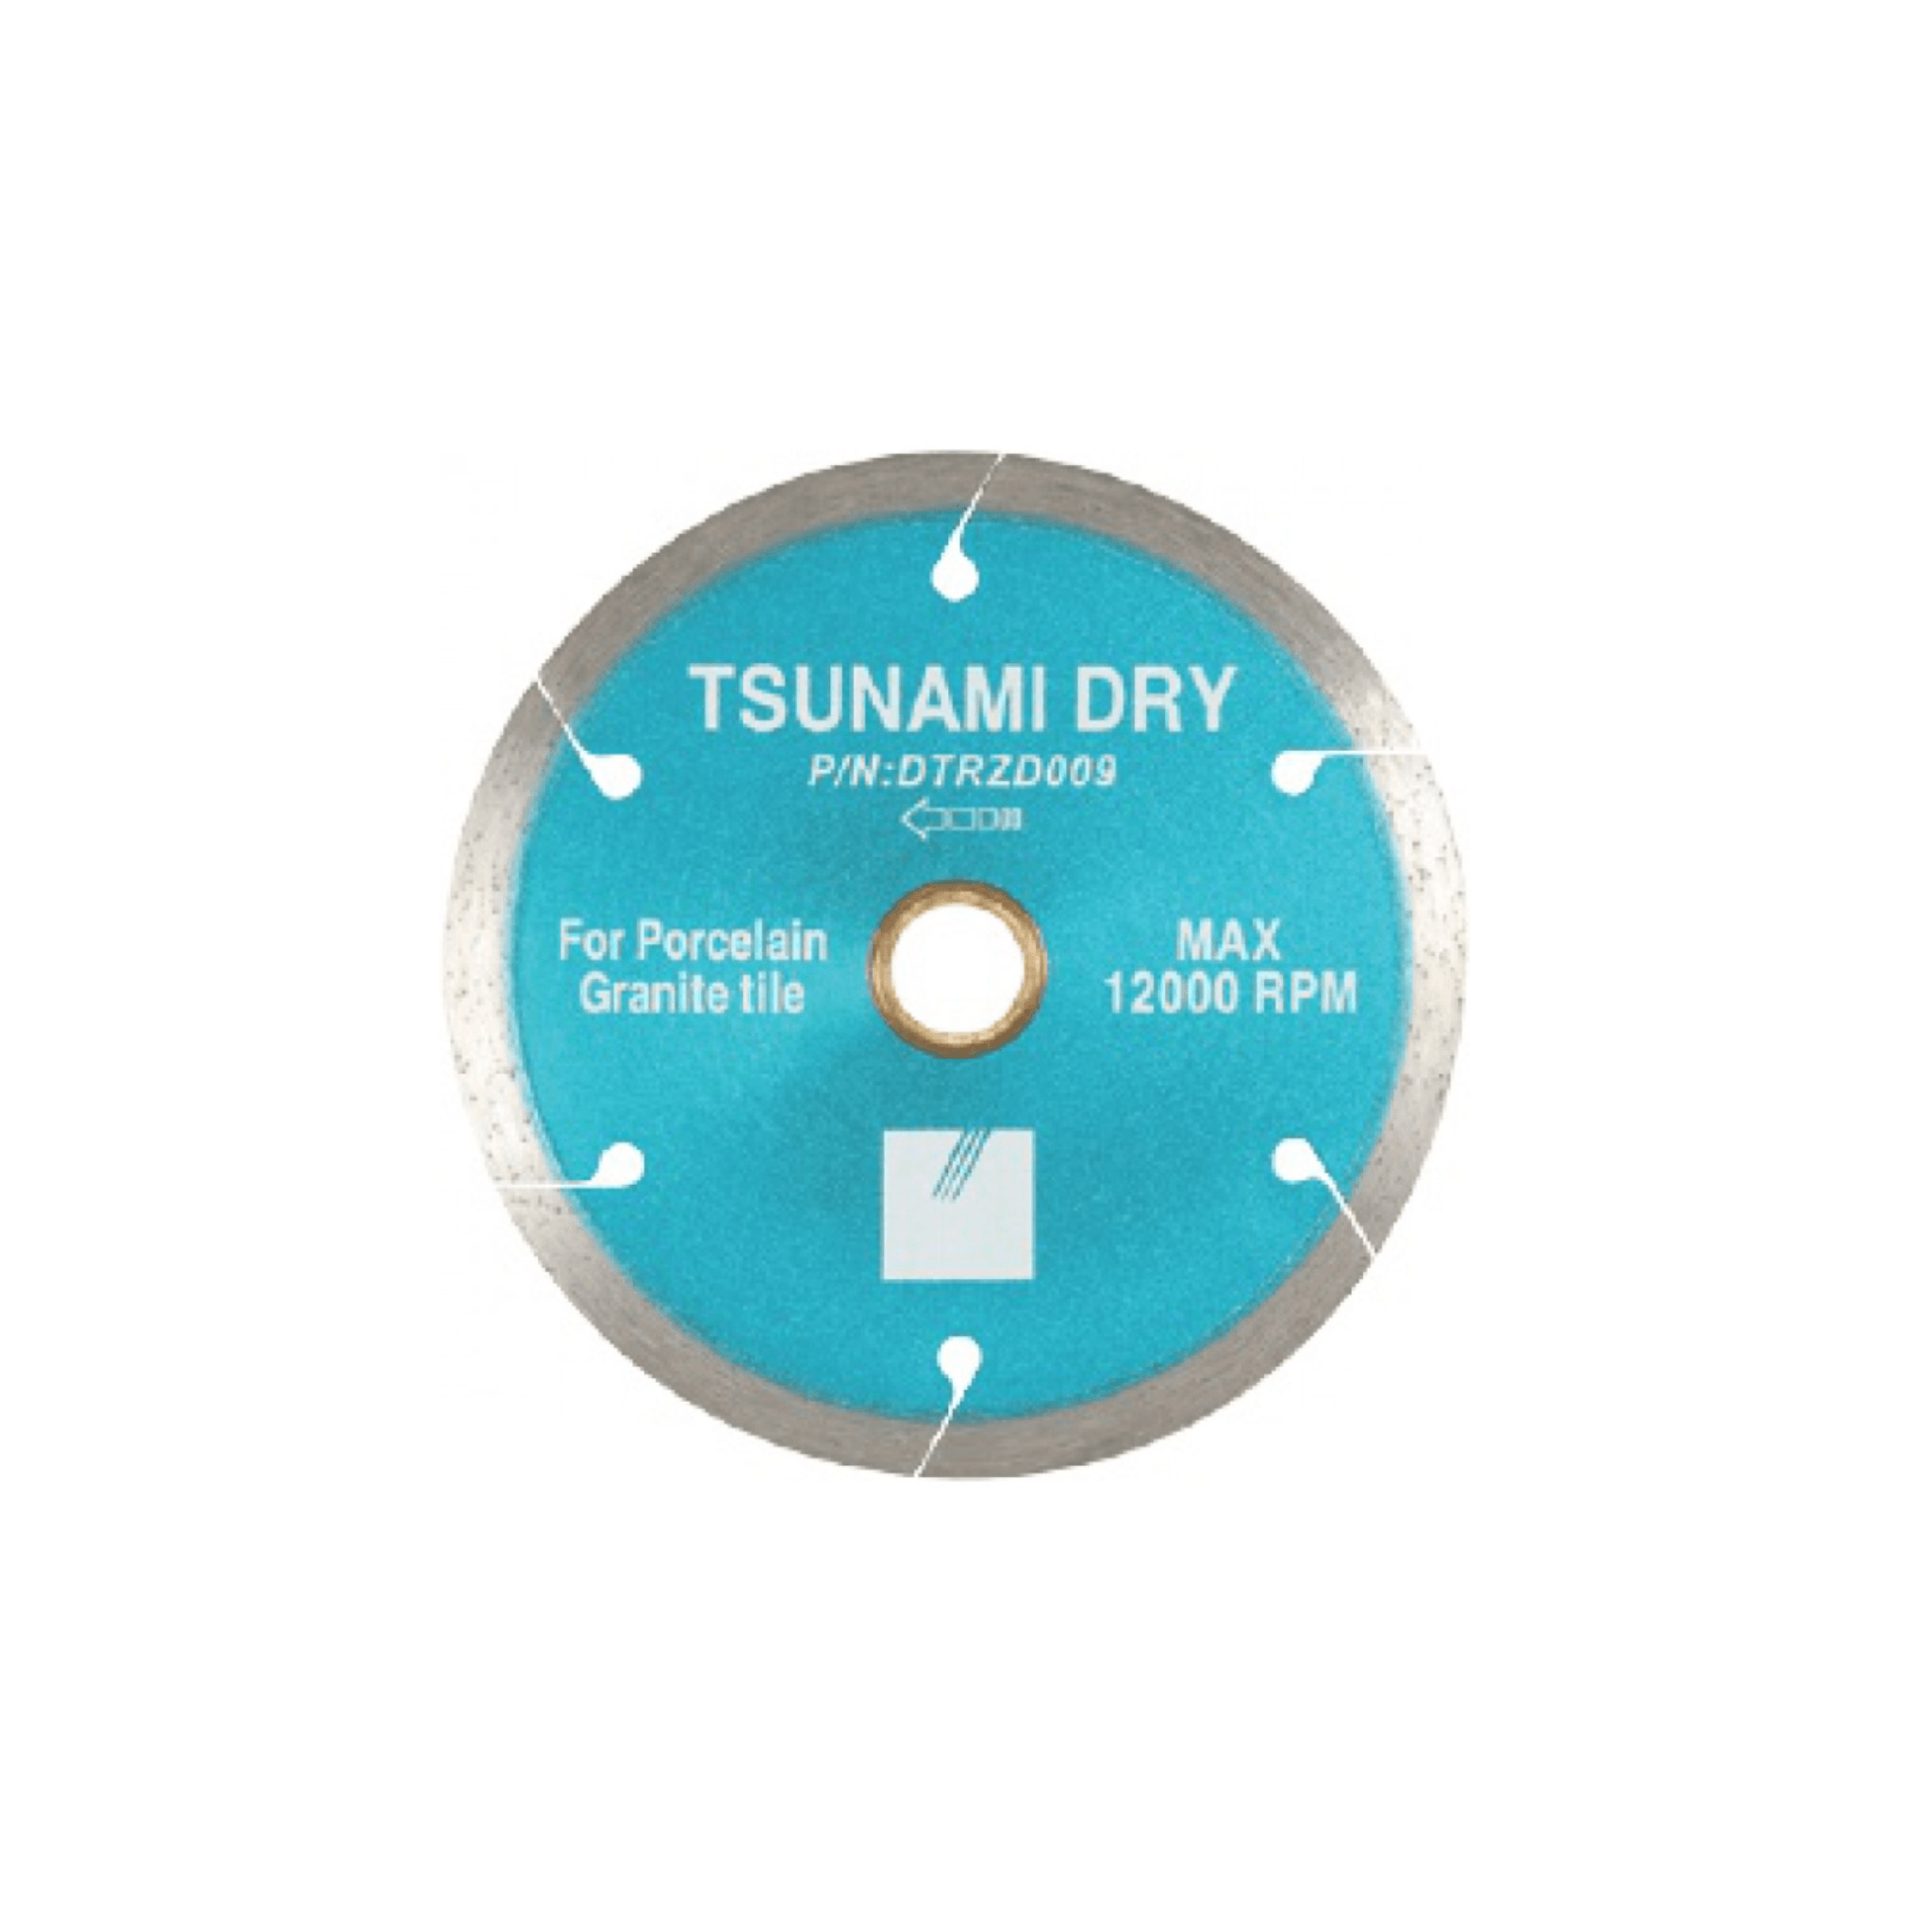 Disco Tsunami Dry 4" - Direct Stone Tool Supply, Inc